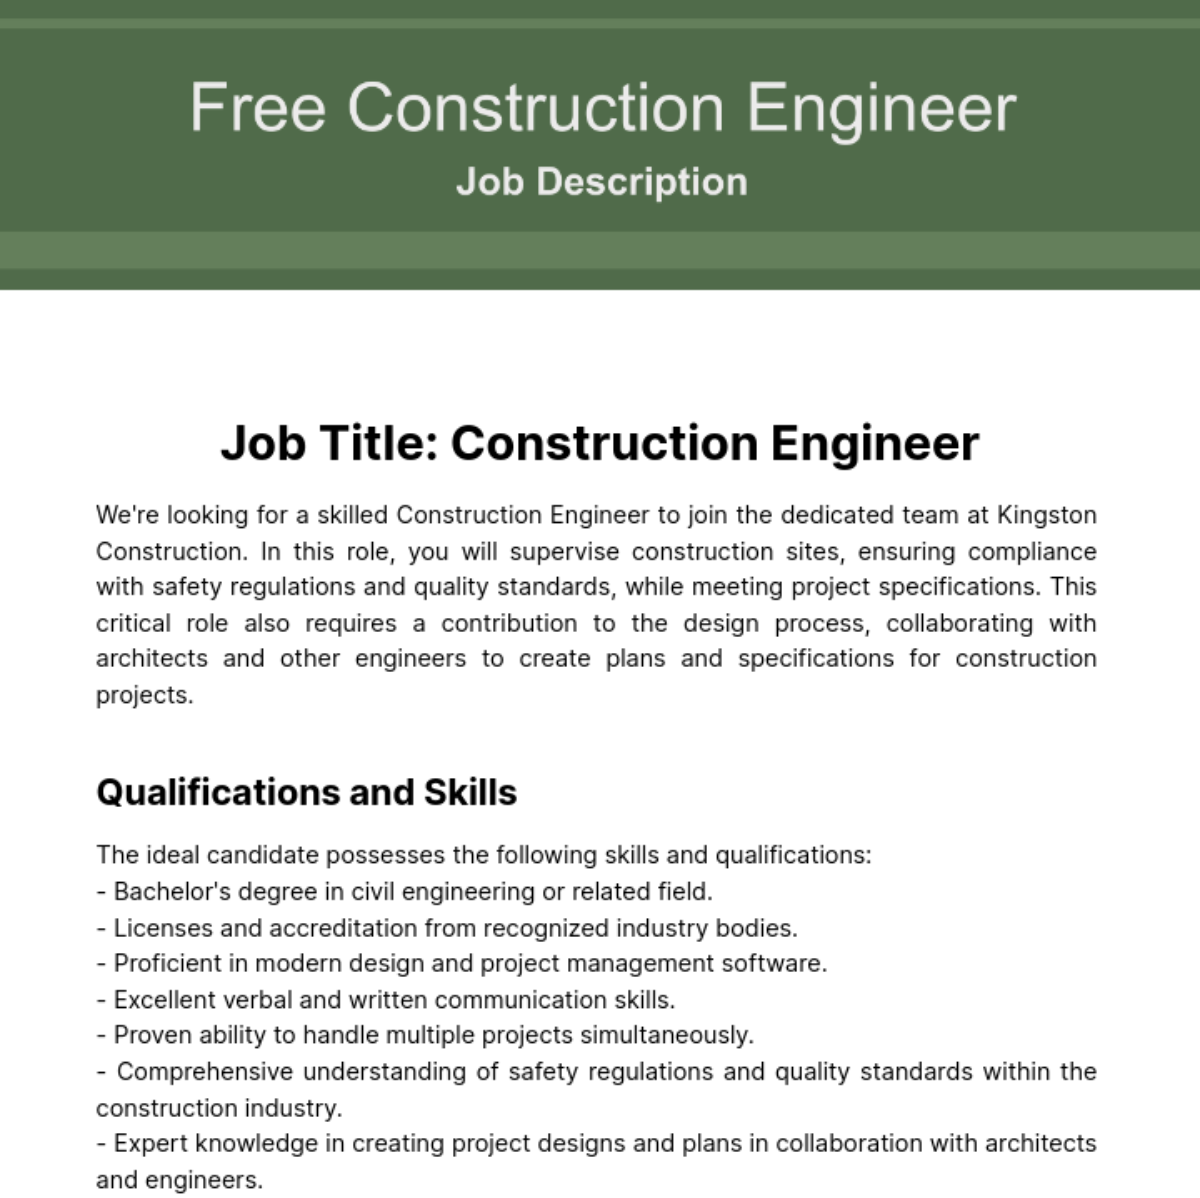 Free Construction Engineer Job Description Template